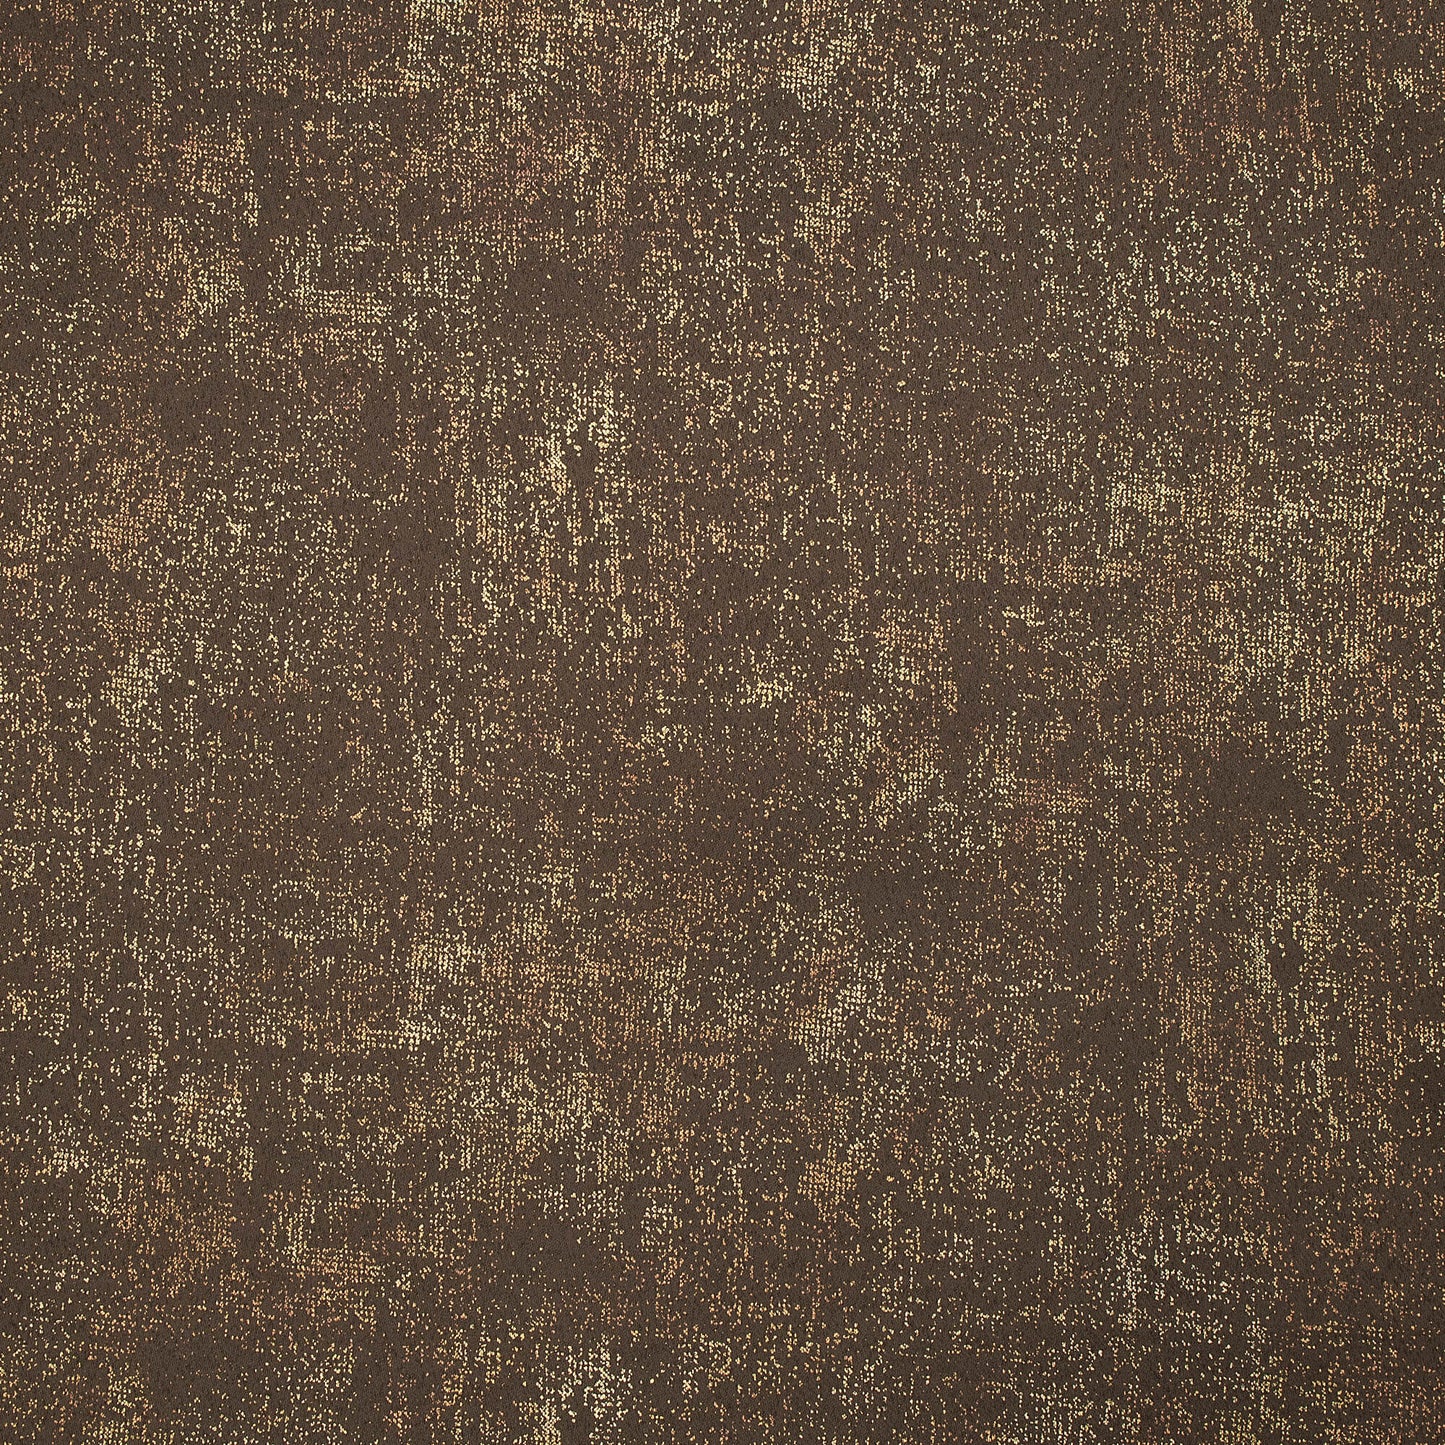 Spice Brown Geometric Pattern Golden Foil Premium Curtain Fabric (Width 54 Inches)